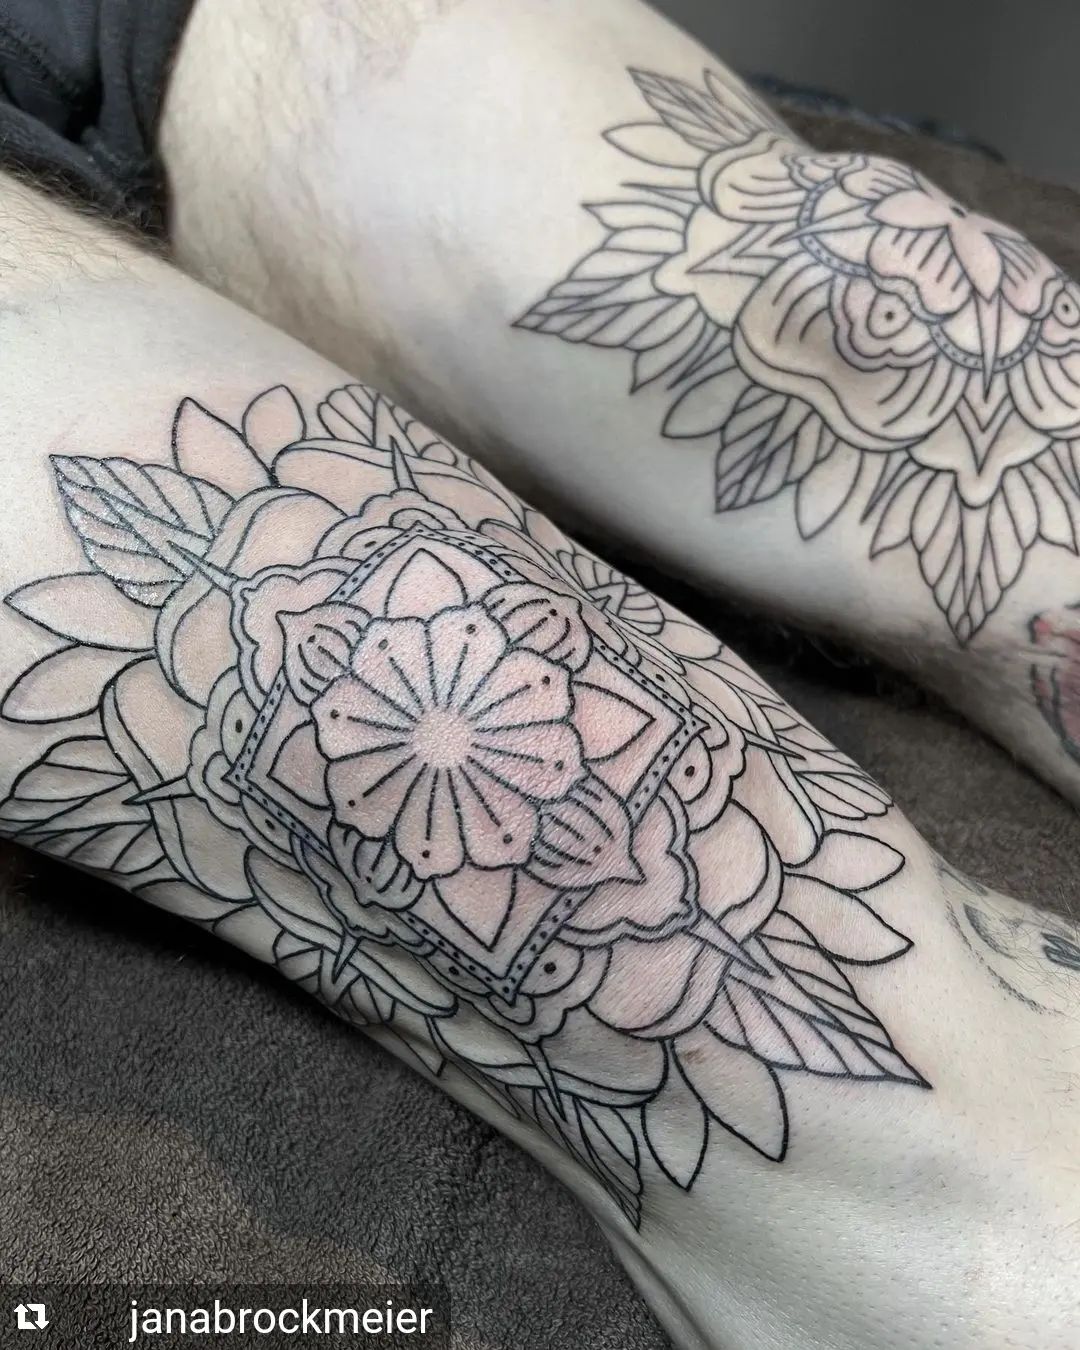 Neu von @janabrockmeier
•••••••
Danke Nicko  work in progress
 

#tattoo #tattoo